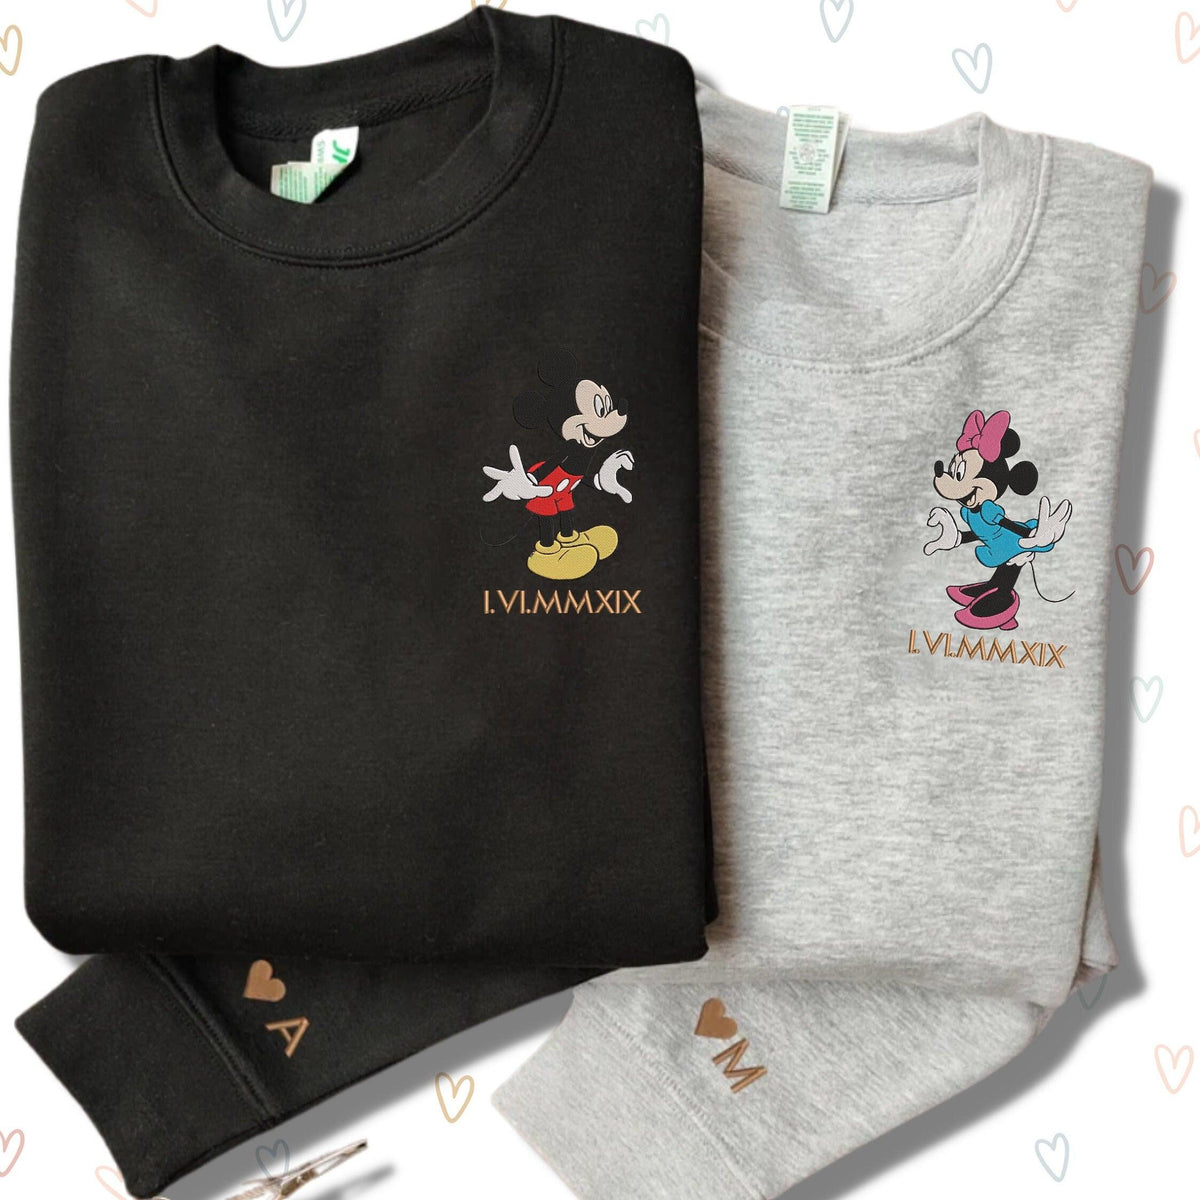 Custom Embroidered Sweatshirts For Couples, Custom Matching Couple Hoodies, Cartoon Mouse Roman Numeral Date Embroidered Matching Couples Sweatshirt